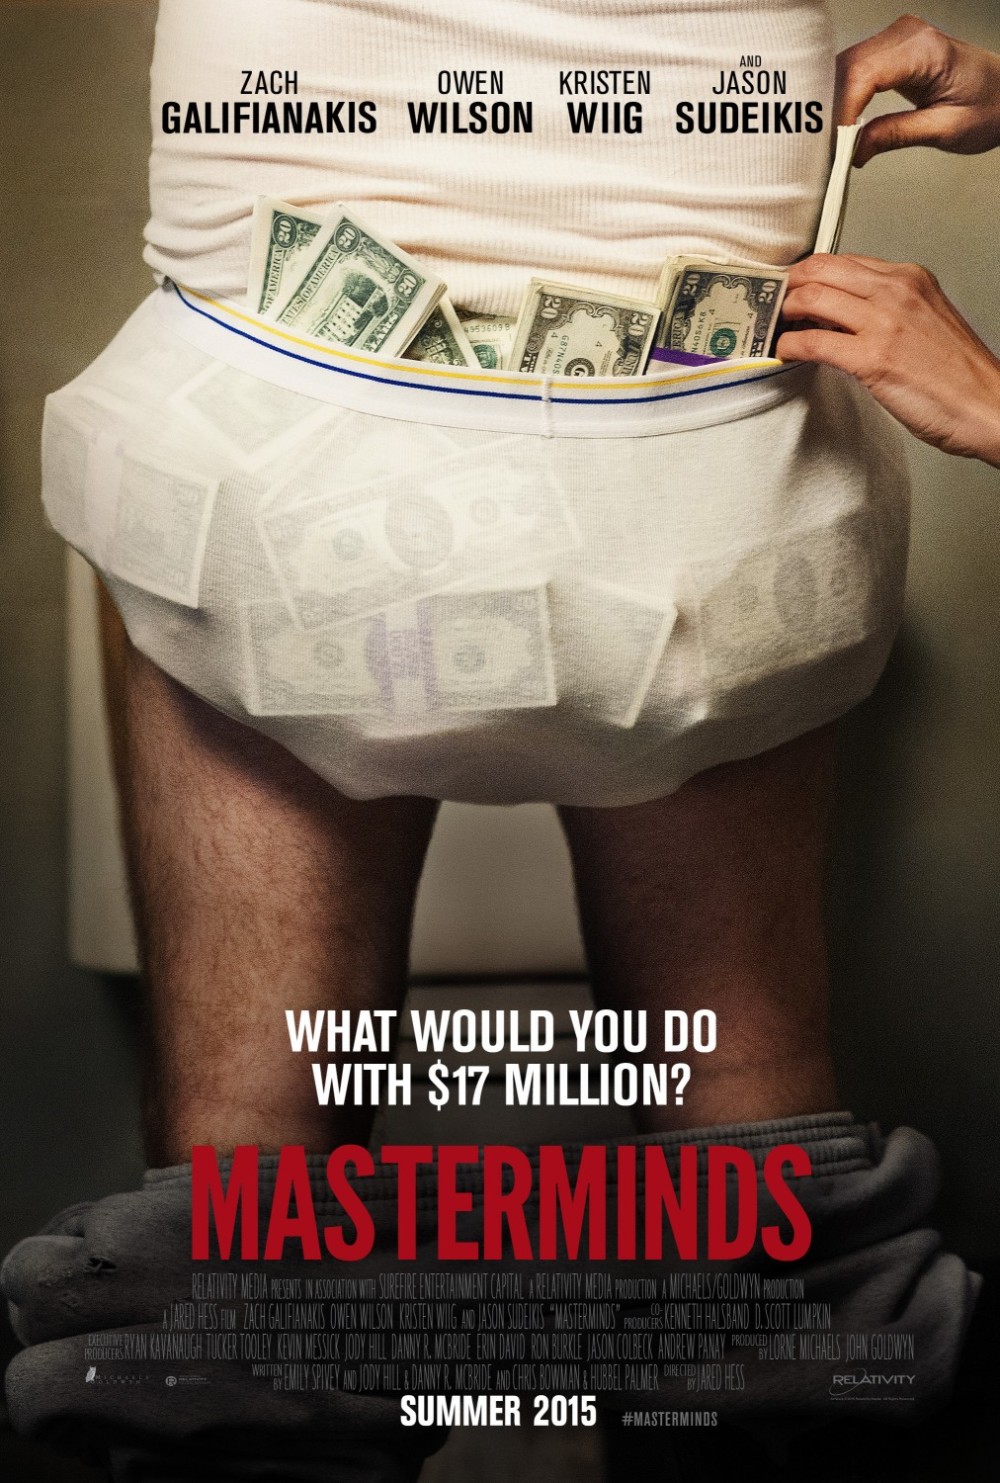 Trailer 'Masterminds': Zach Galifianakis steelt $17 miljoen